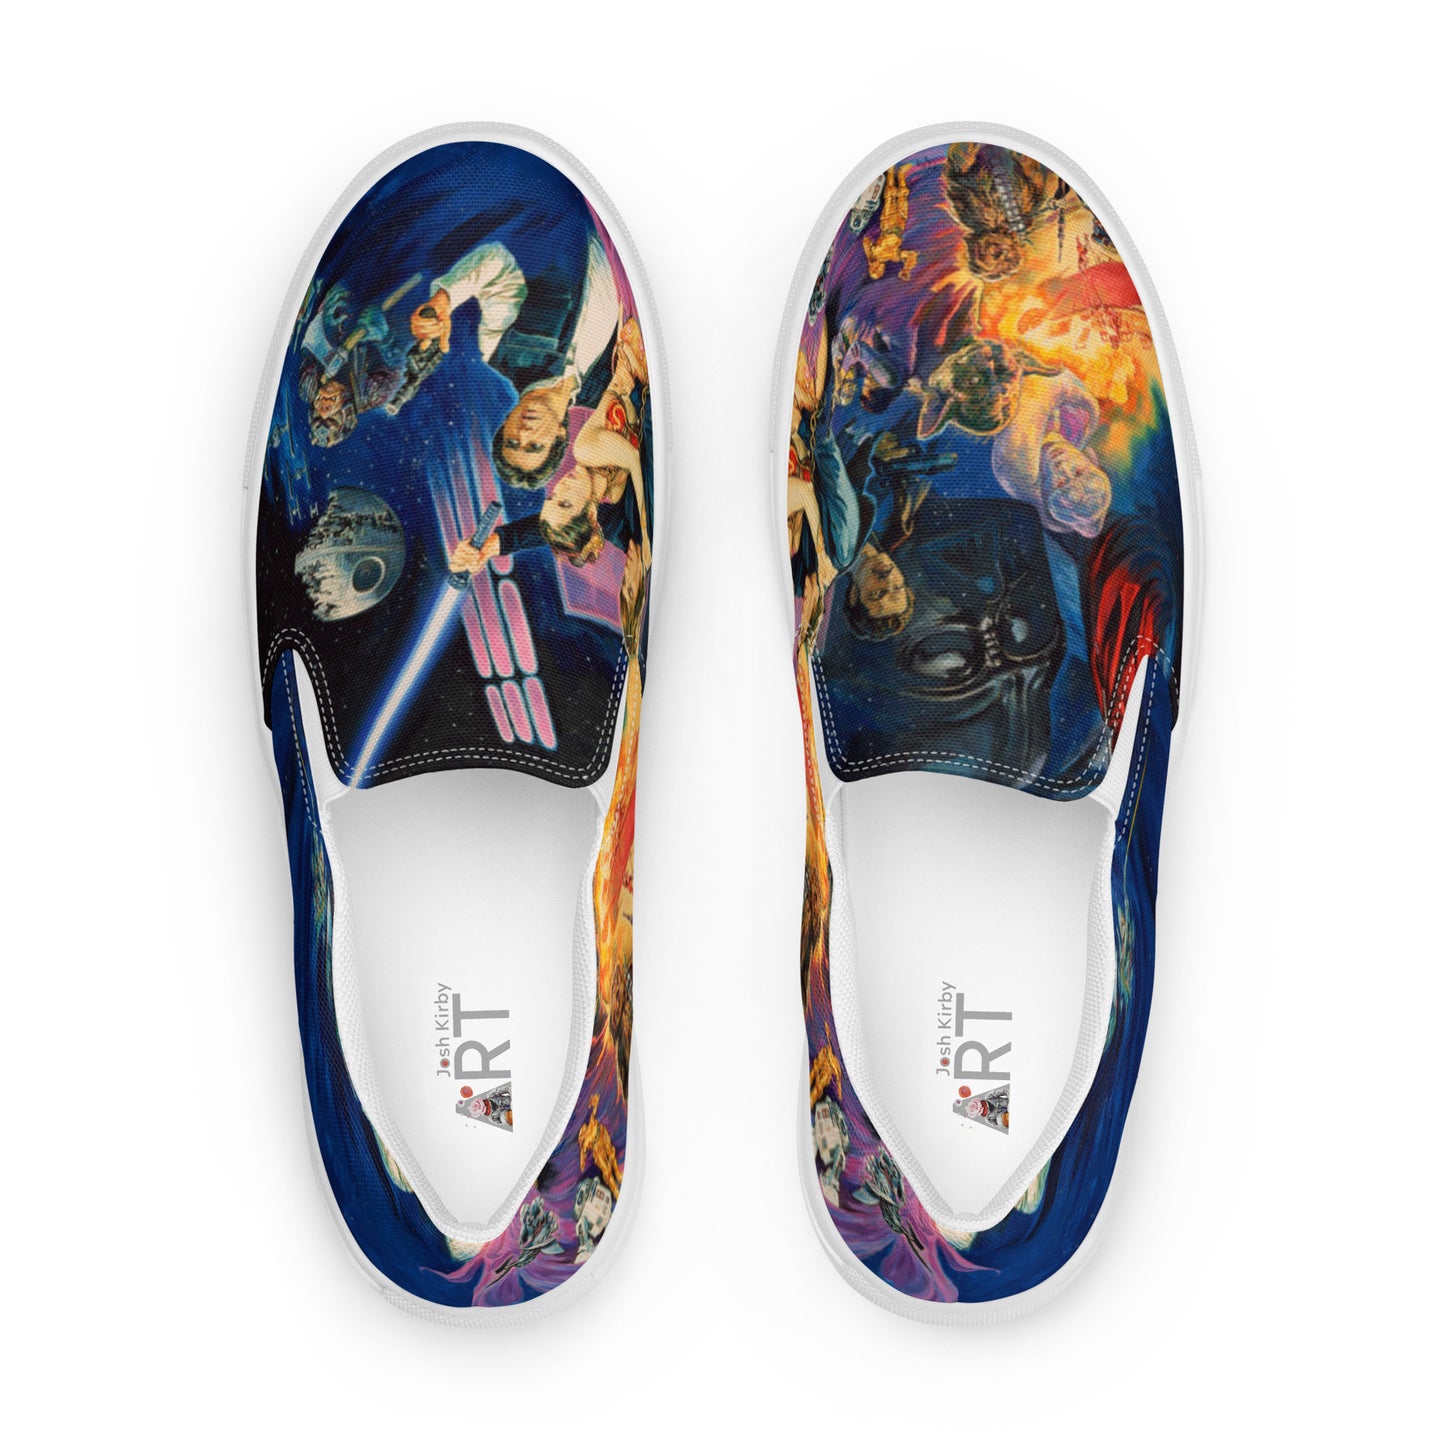 Star Wars - Return of the Jedi Men’s slip-on canvas shoes